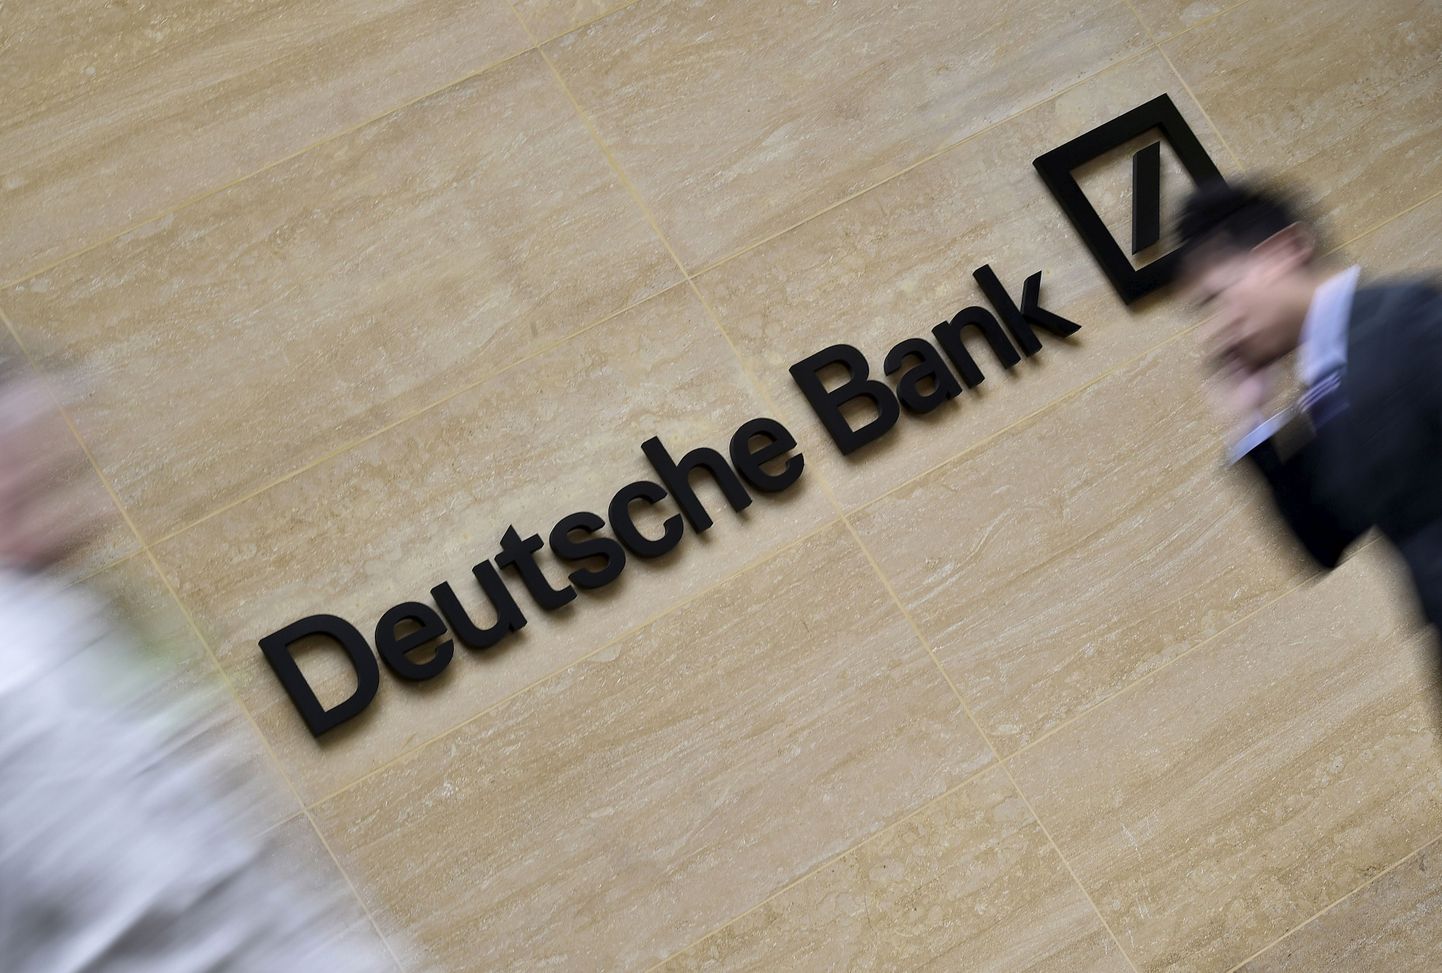 Логотип Deutsche Bank. Иллюстративное фото.